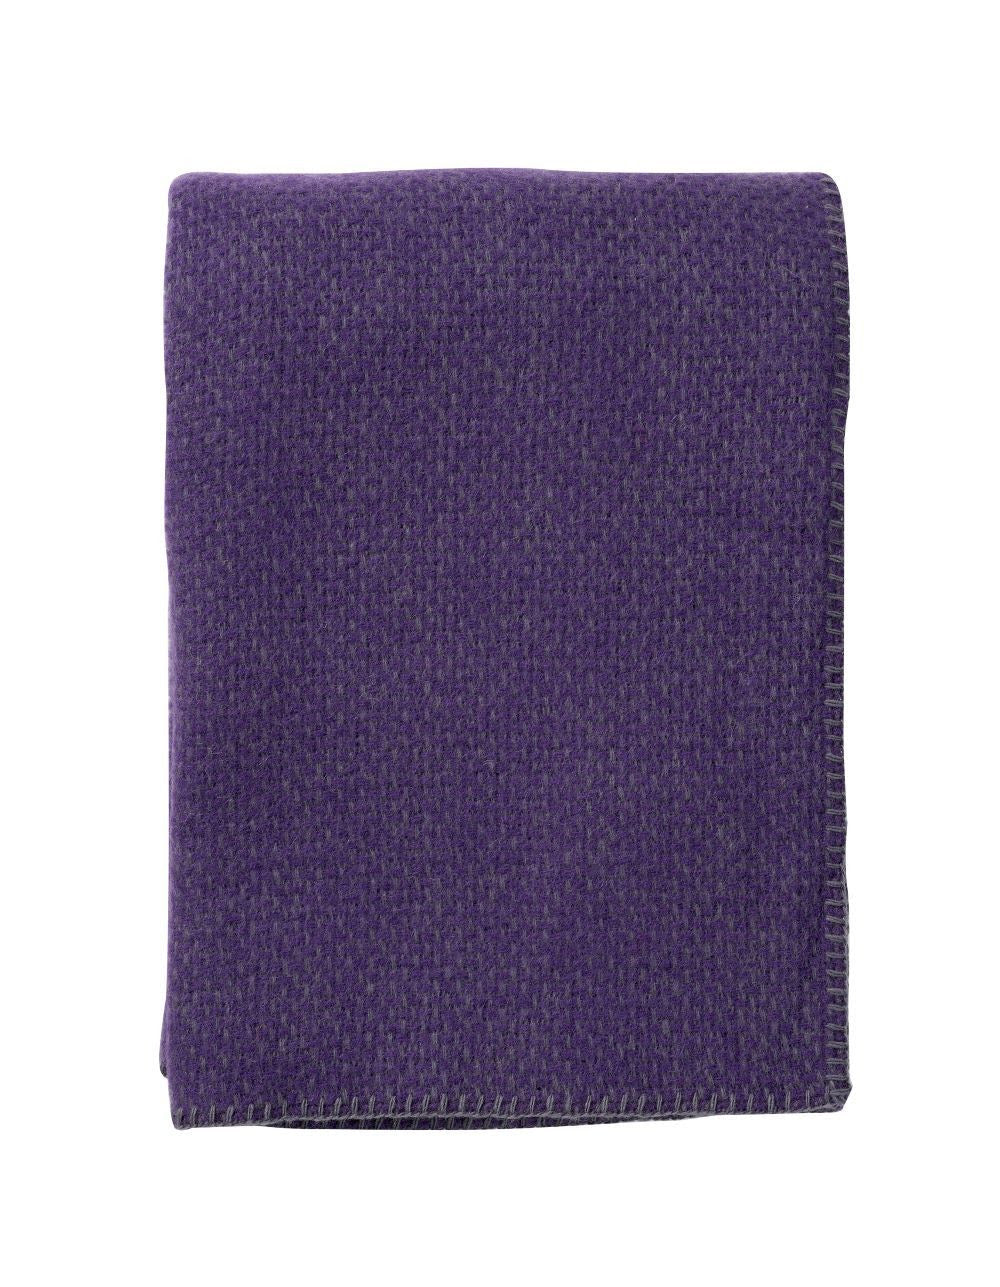 Klippan wool blanket 130 x 180cm Domino Throw Purple